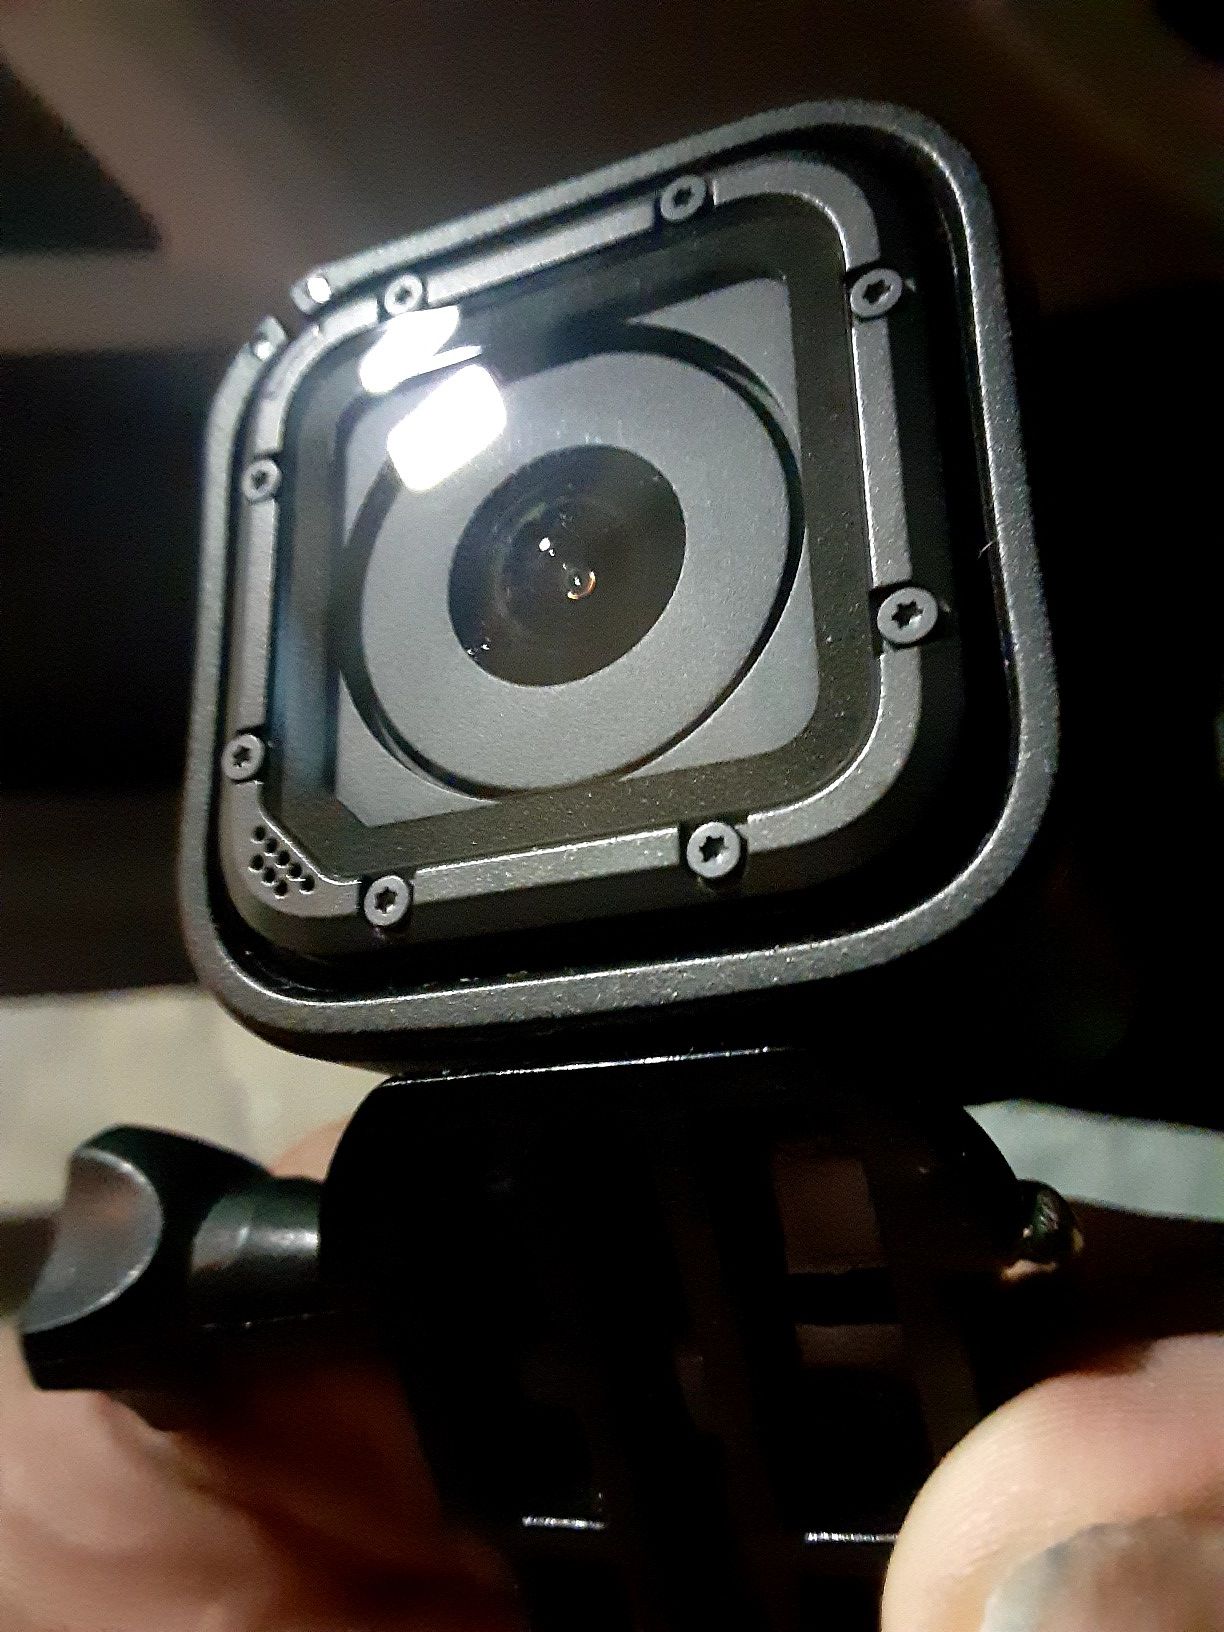 GoPro video camera